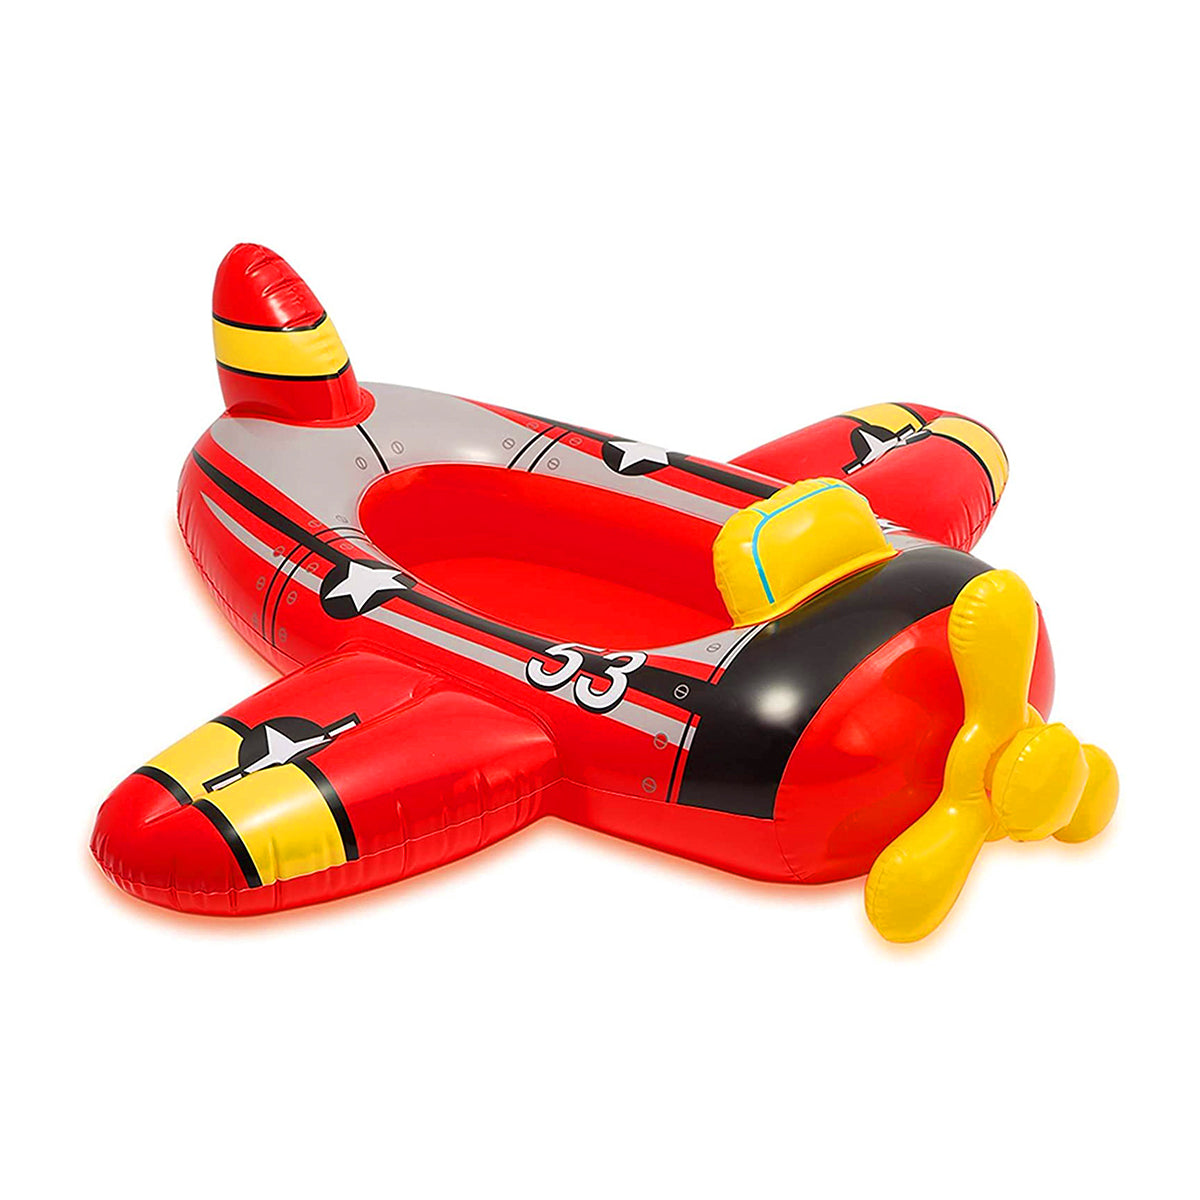 Intex - The Wet Set Inflatable Pool Cruiser